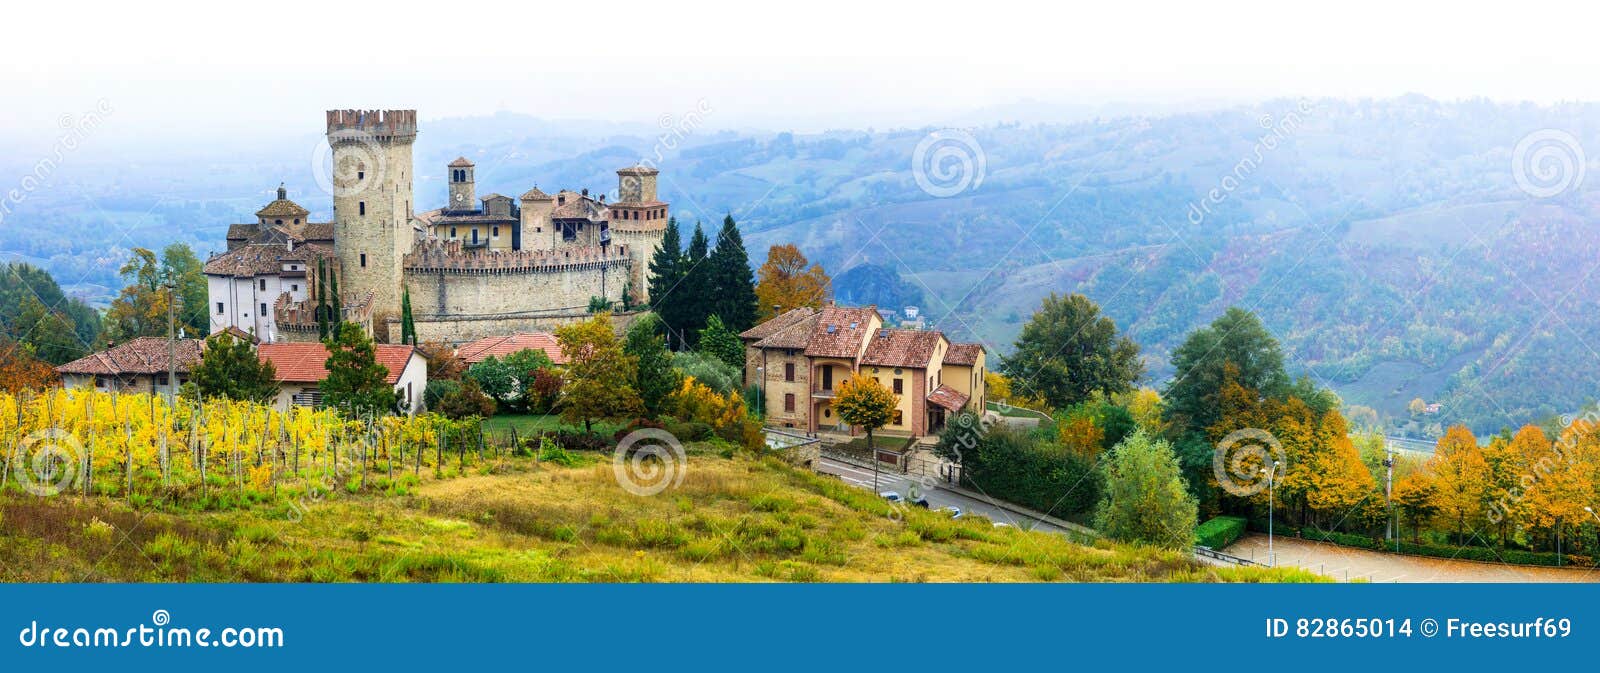 medieval village borgo vigoleno with well preserved castle in